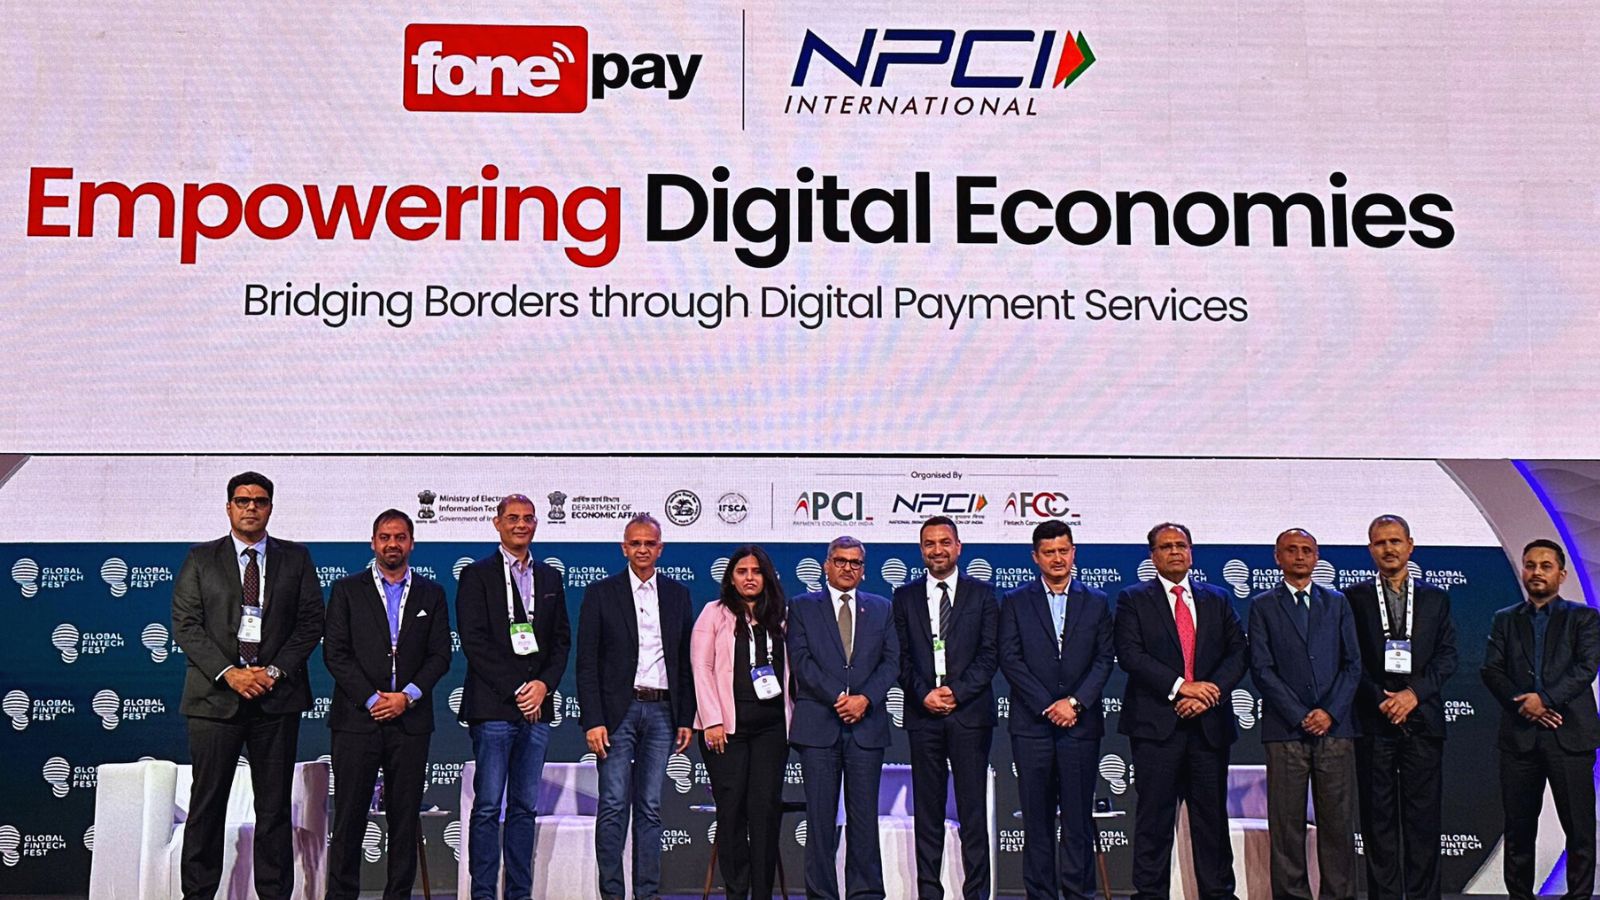 Global fintech fest fone pay with NPCI (2)